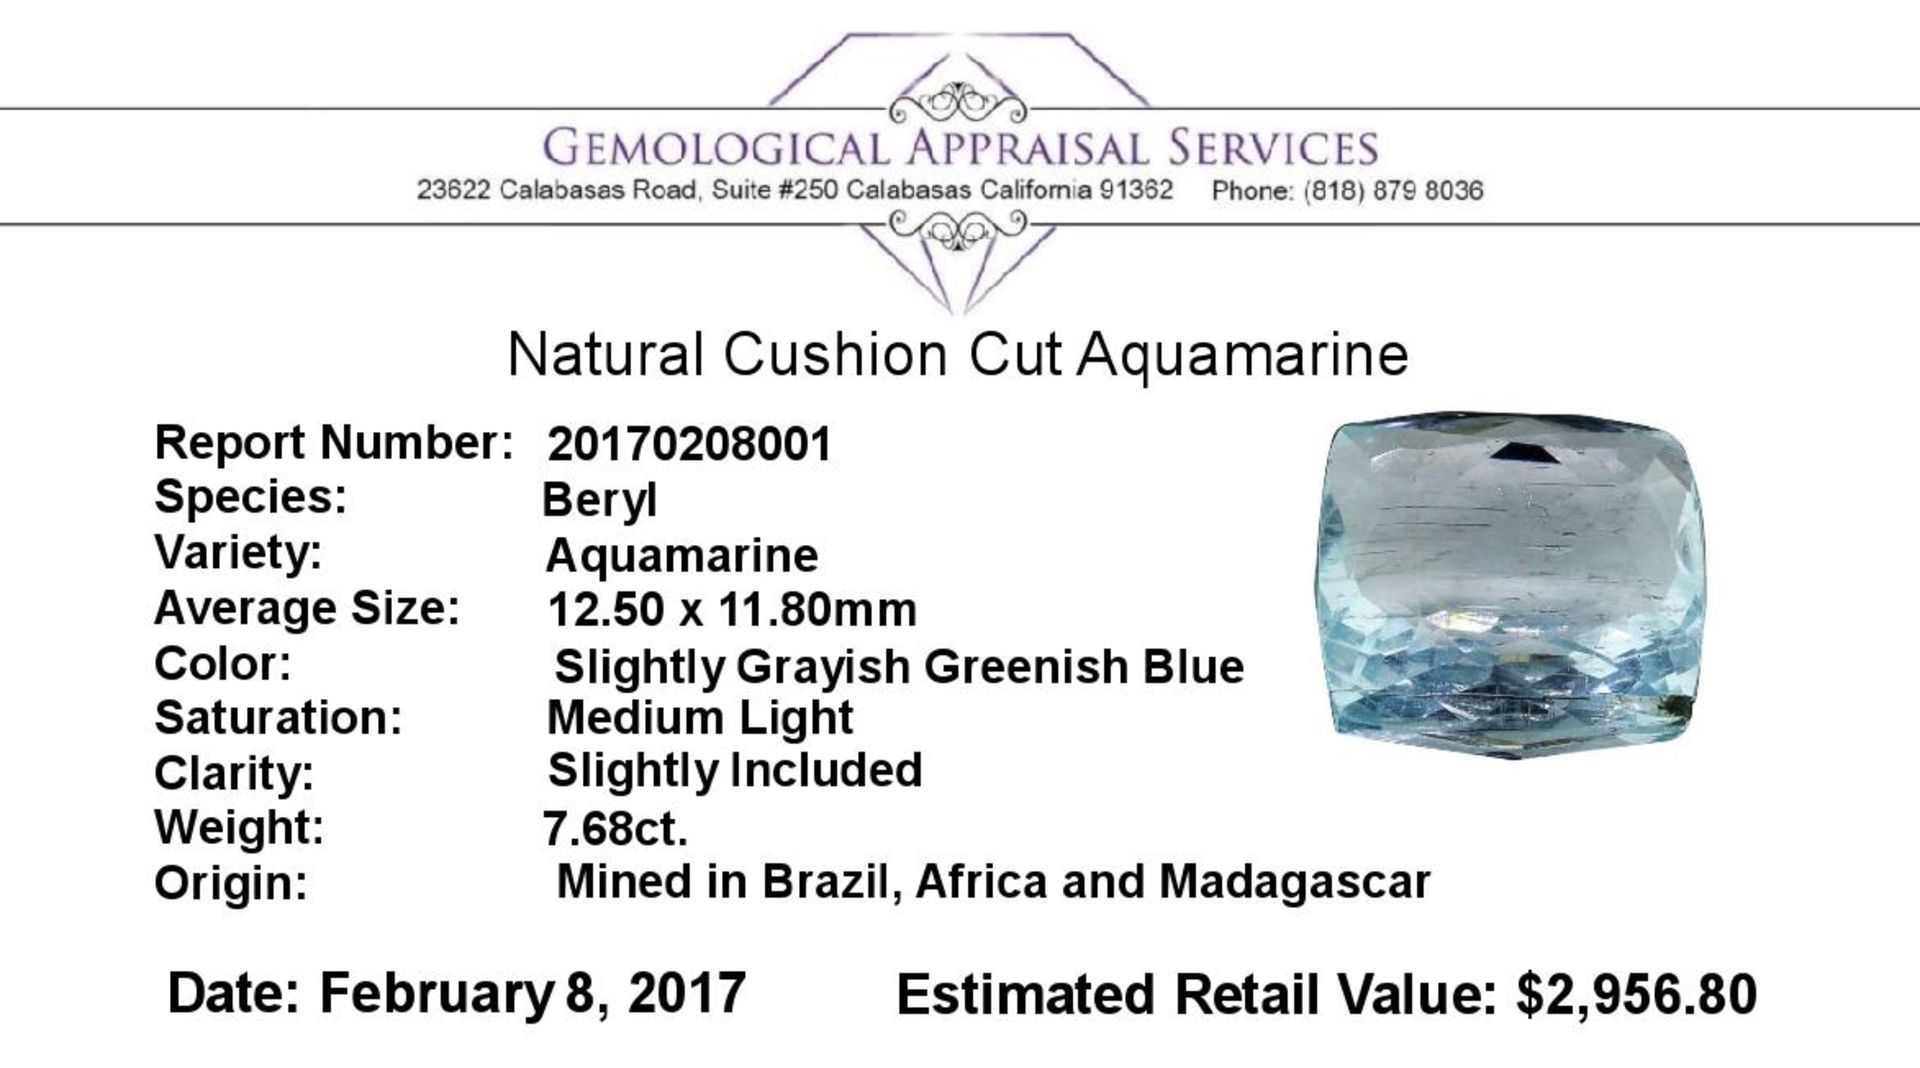 7.68 ct.Natural Cushion Cut Aquamarine - Image 2 of 2